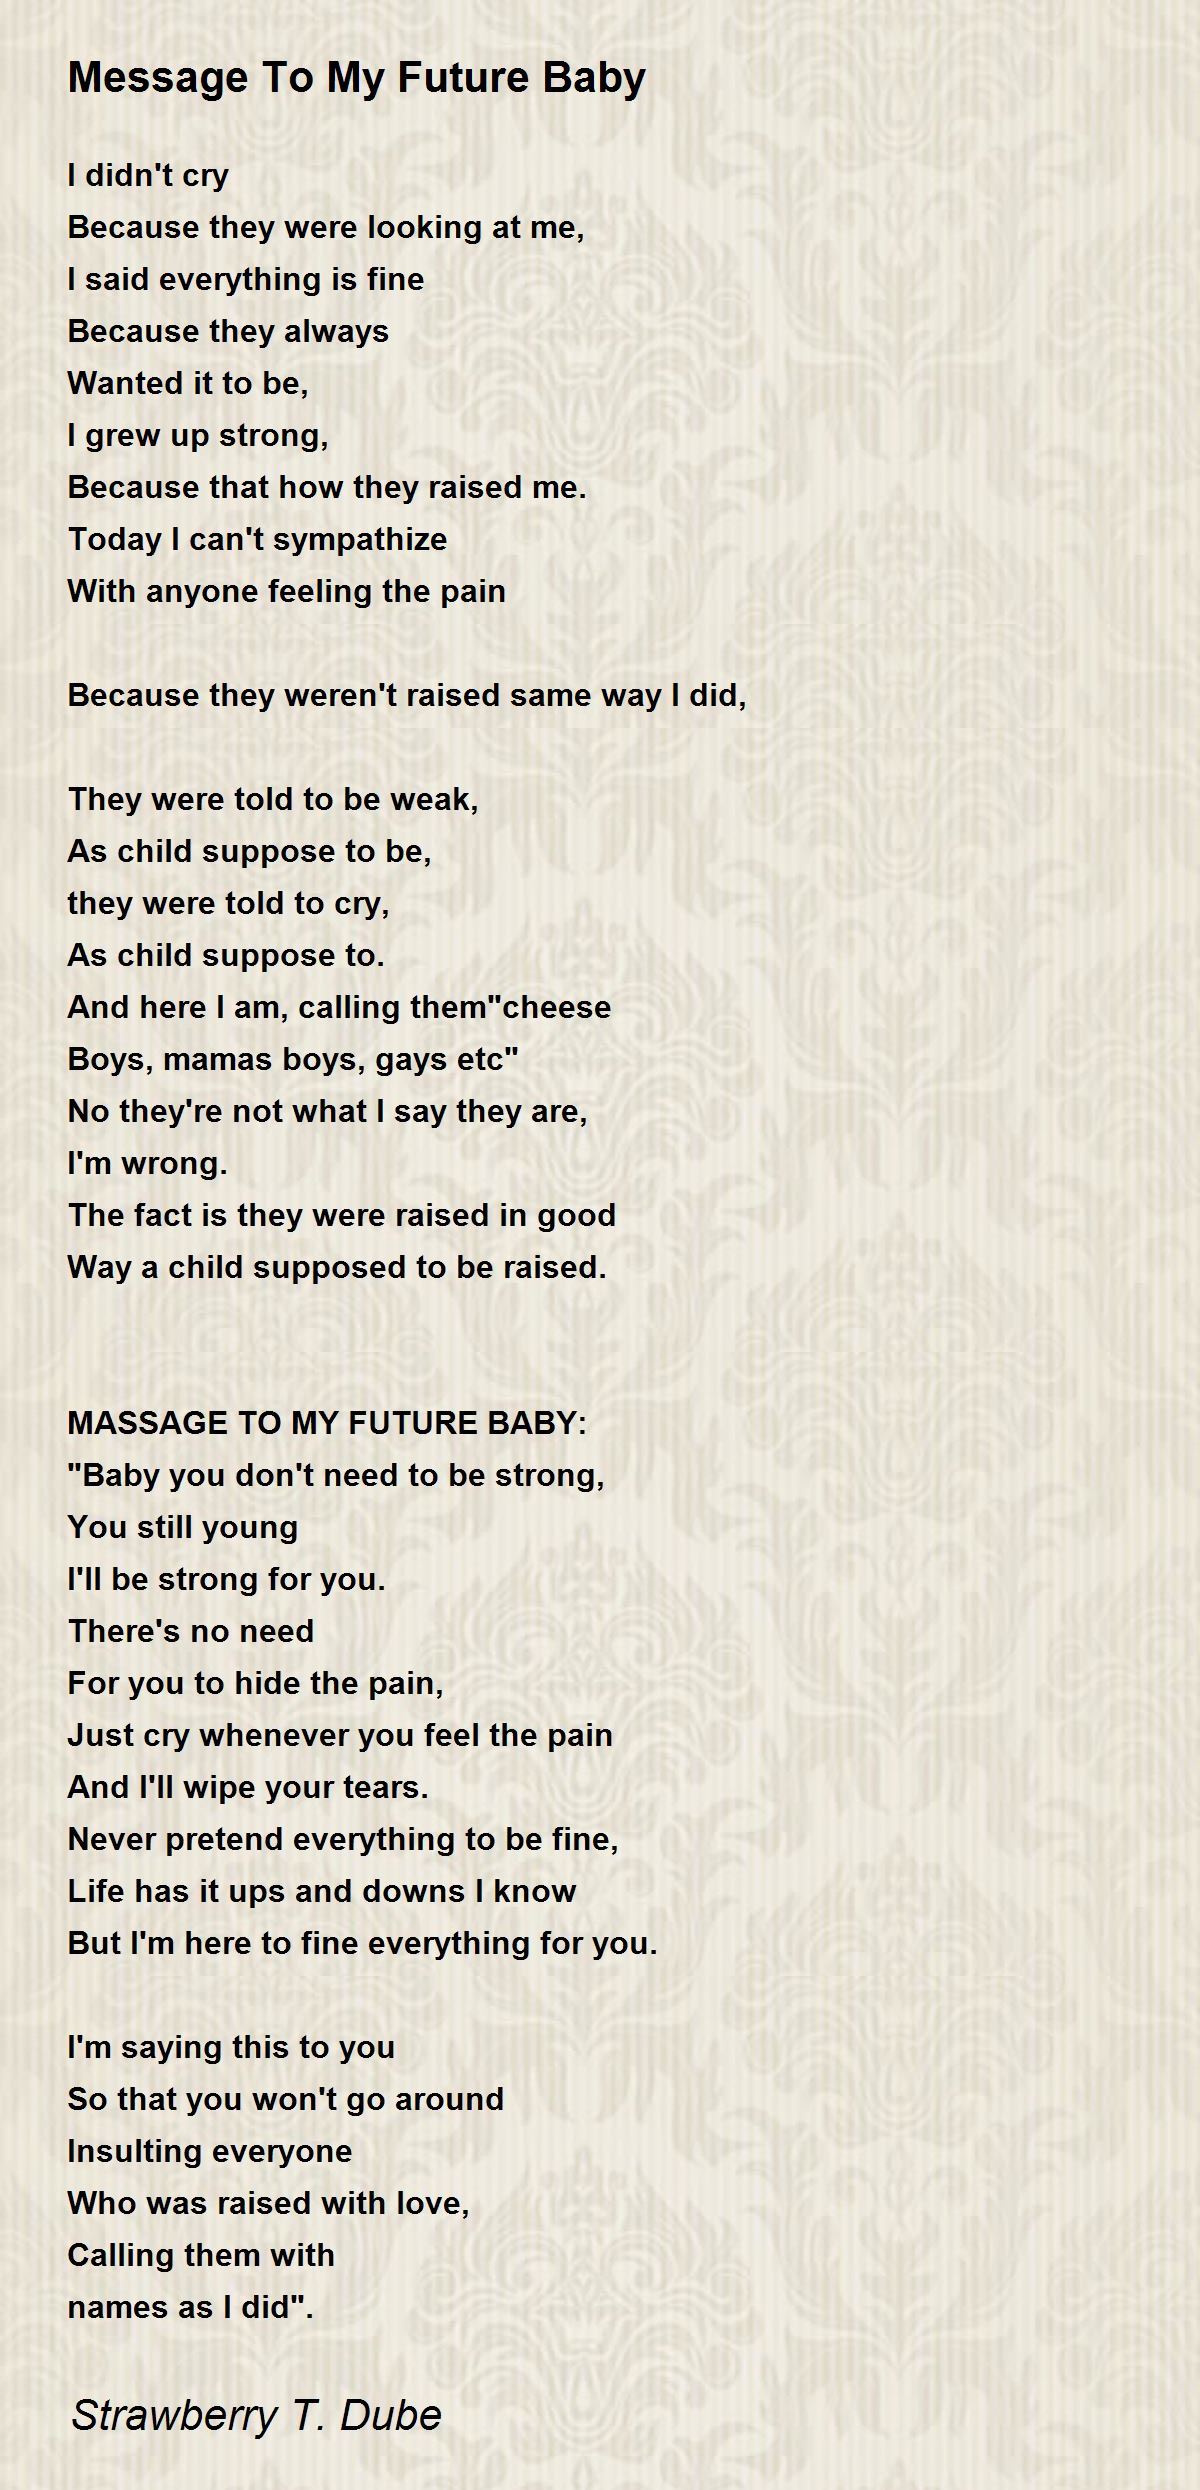 Message To My Future Baby - Message To My Future Baby Poem by